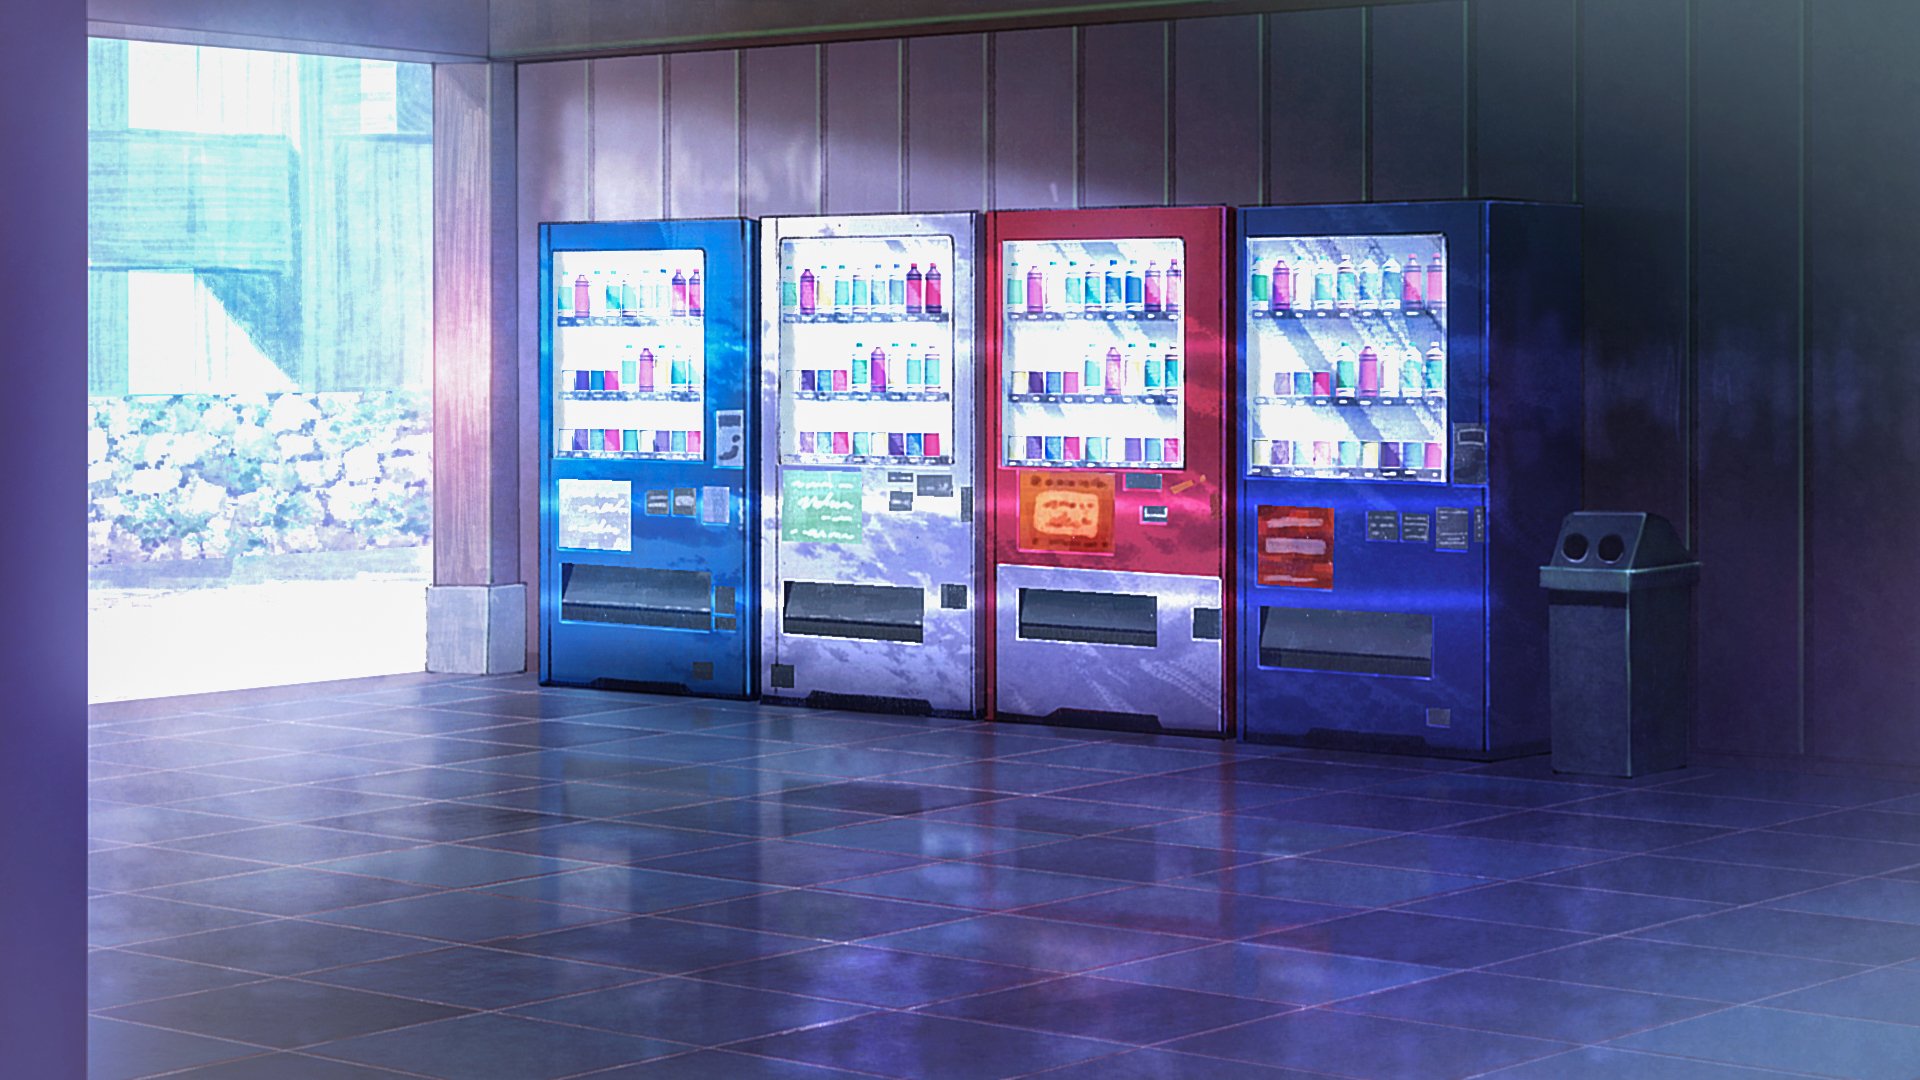 Vending machine by ColorOfTheSea on DeviantArt